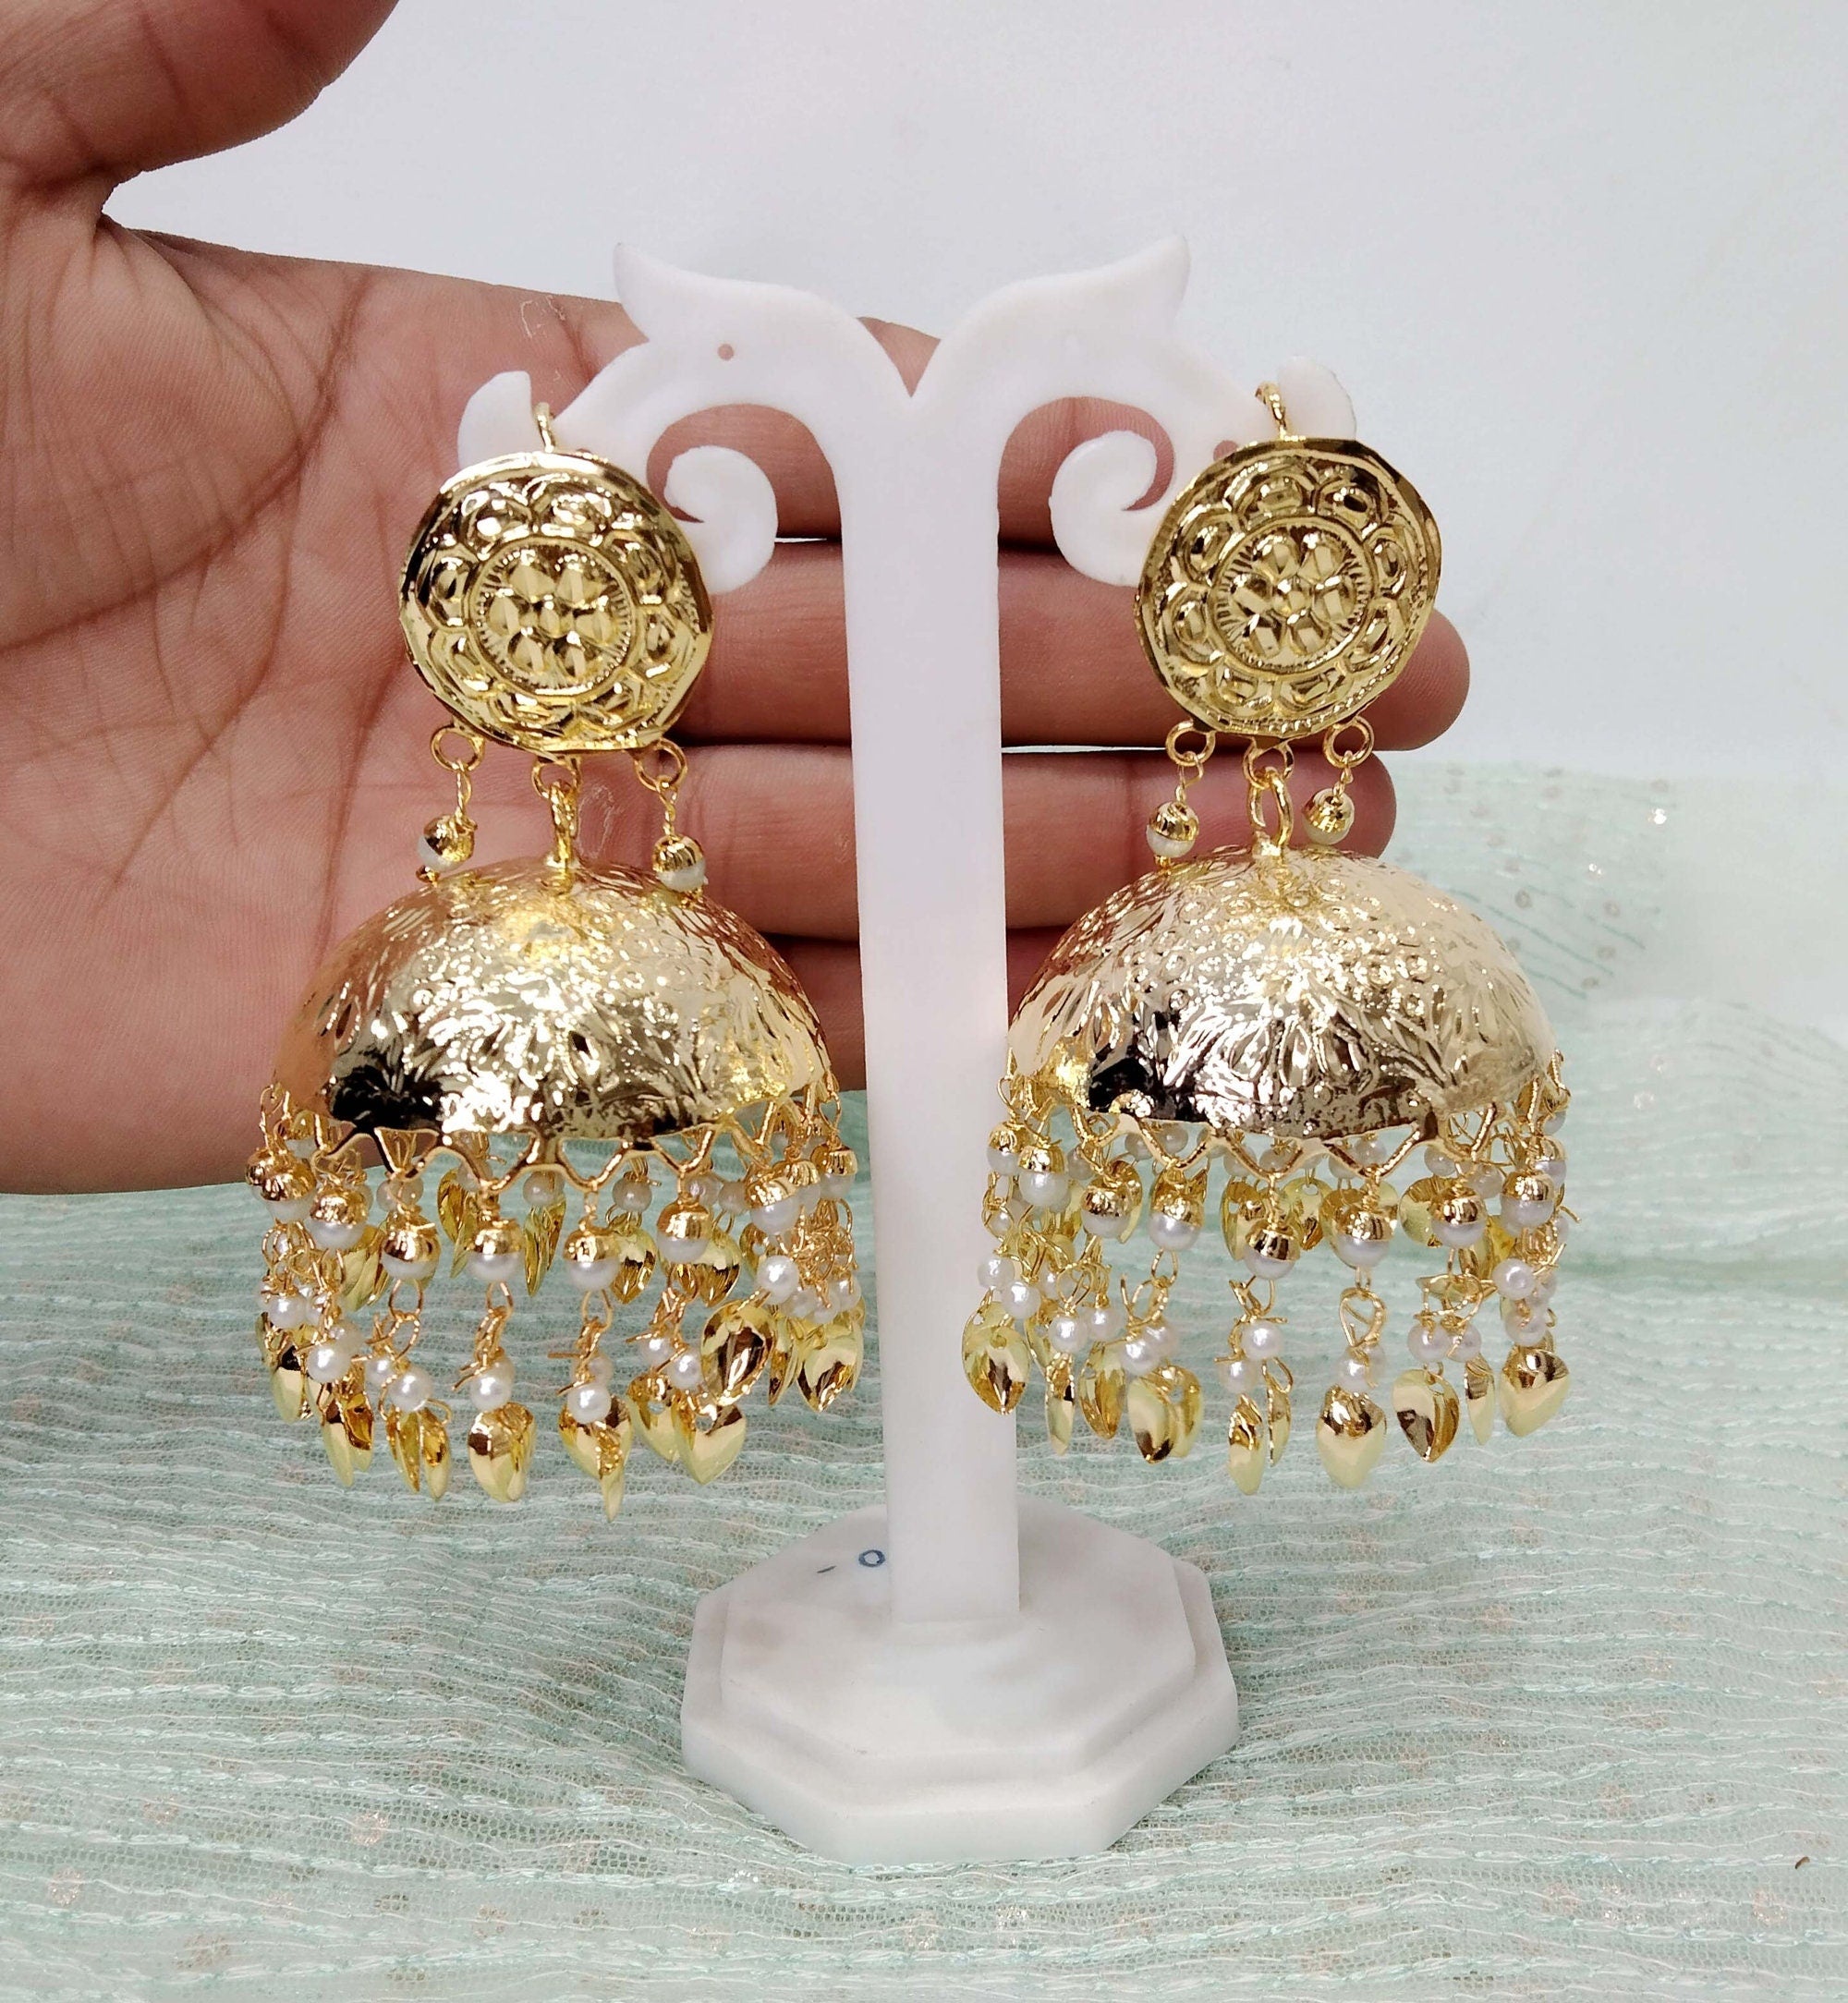 Details more than 212 big earrings jhumka latest